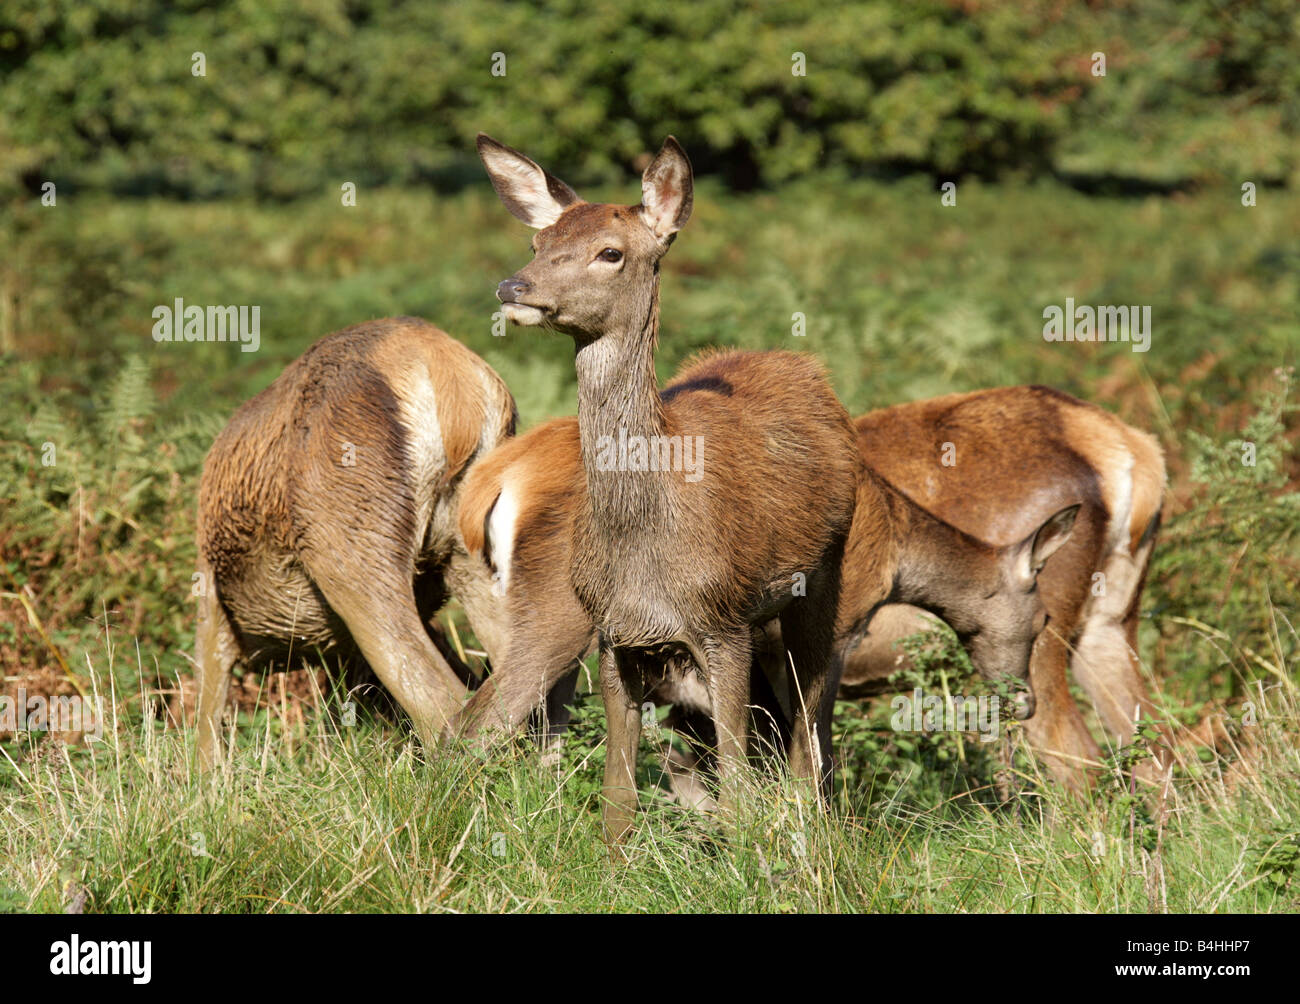 A Group of Red Deer Does, Cervus elaphus Stock Photo